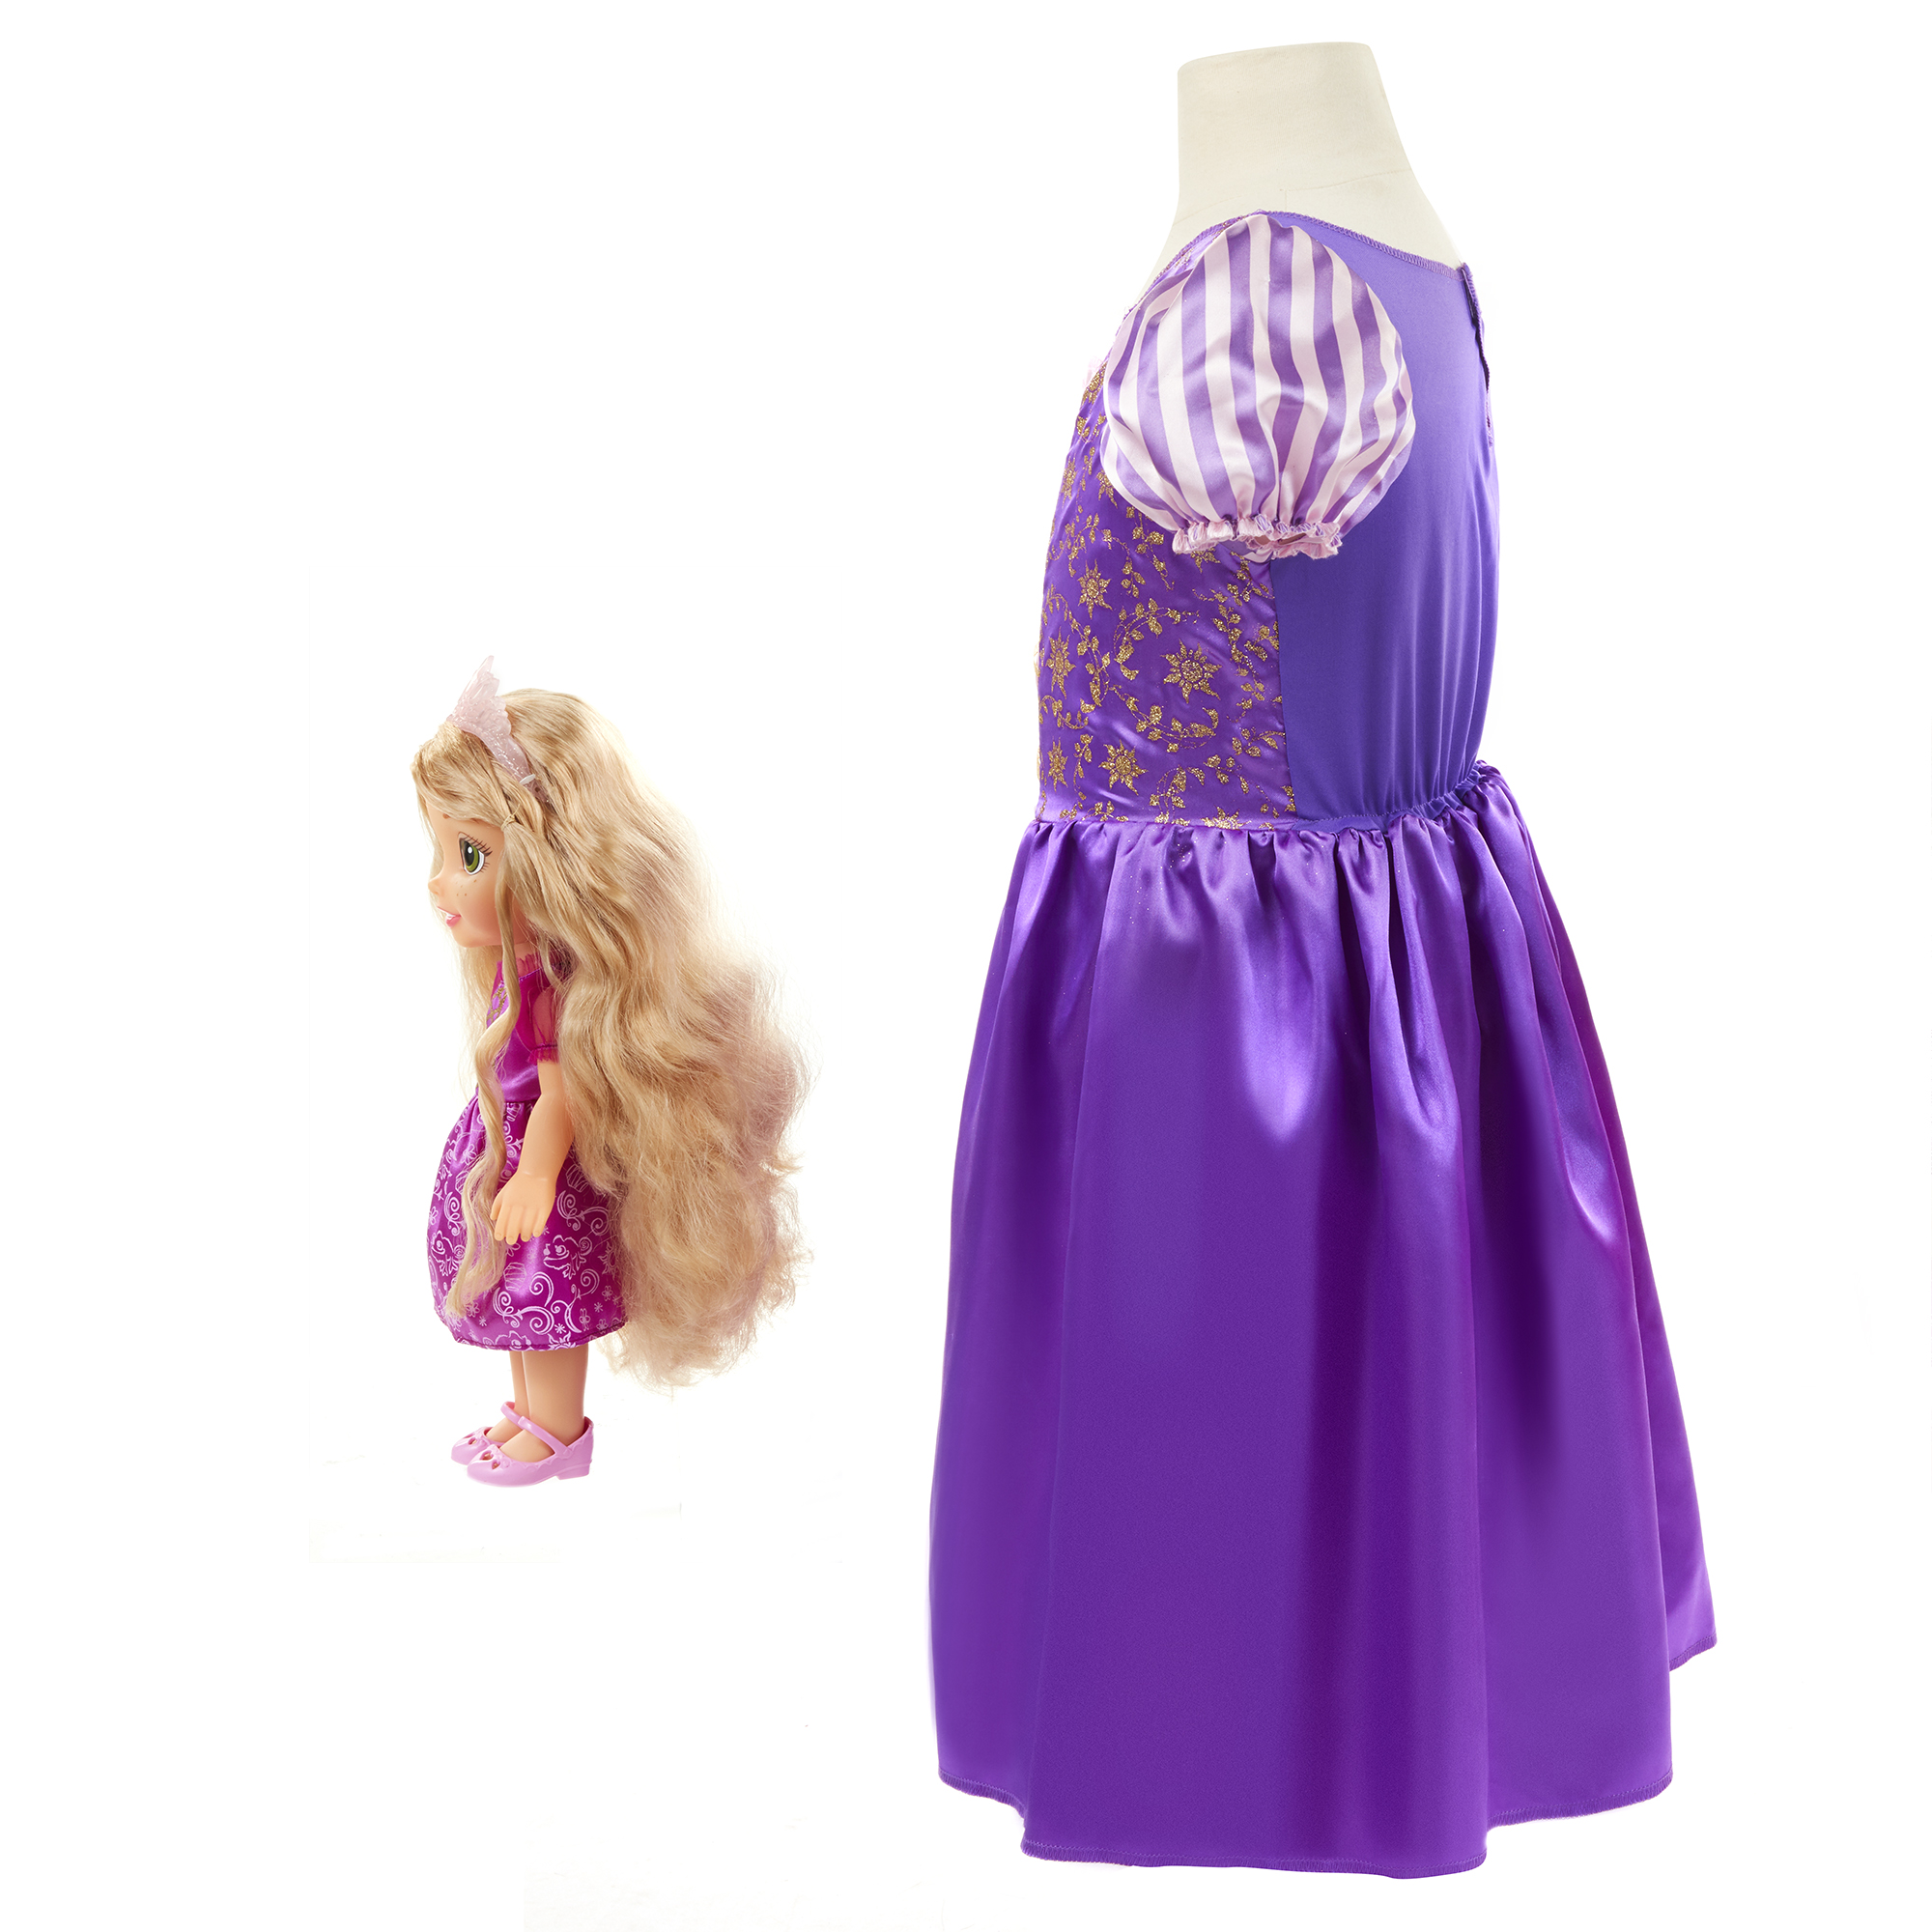 Disney Princess Rapunzel Toddler Doll and Dress - image 5 of 8